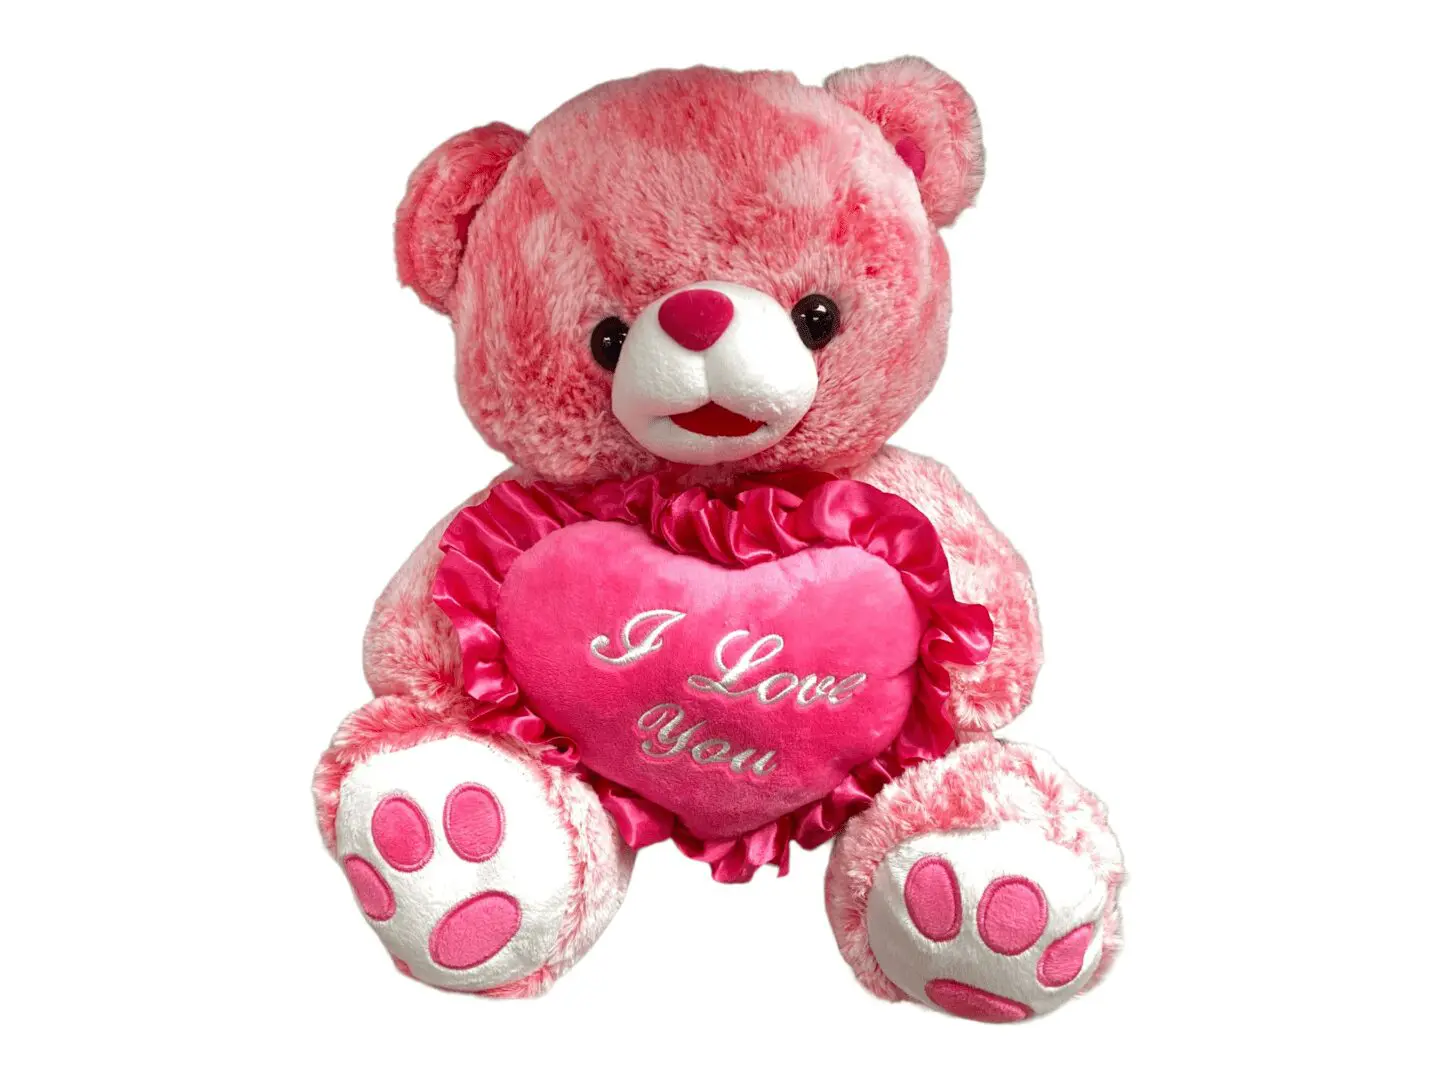 Gt8012 pink heart teddy bear 20